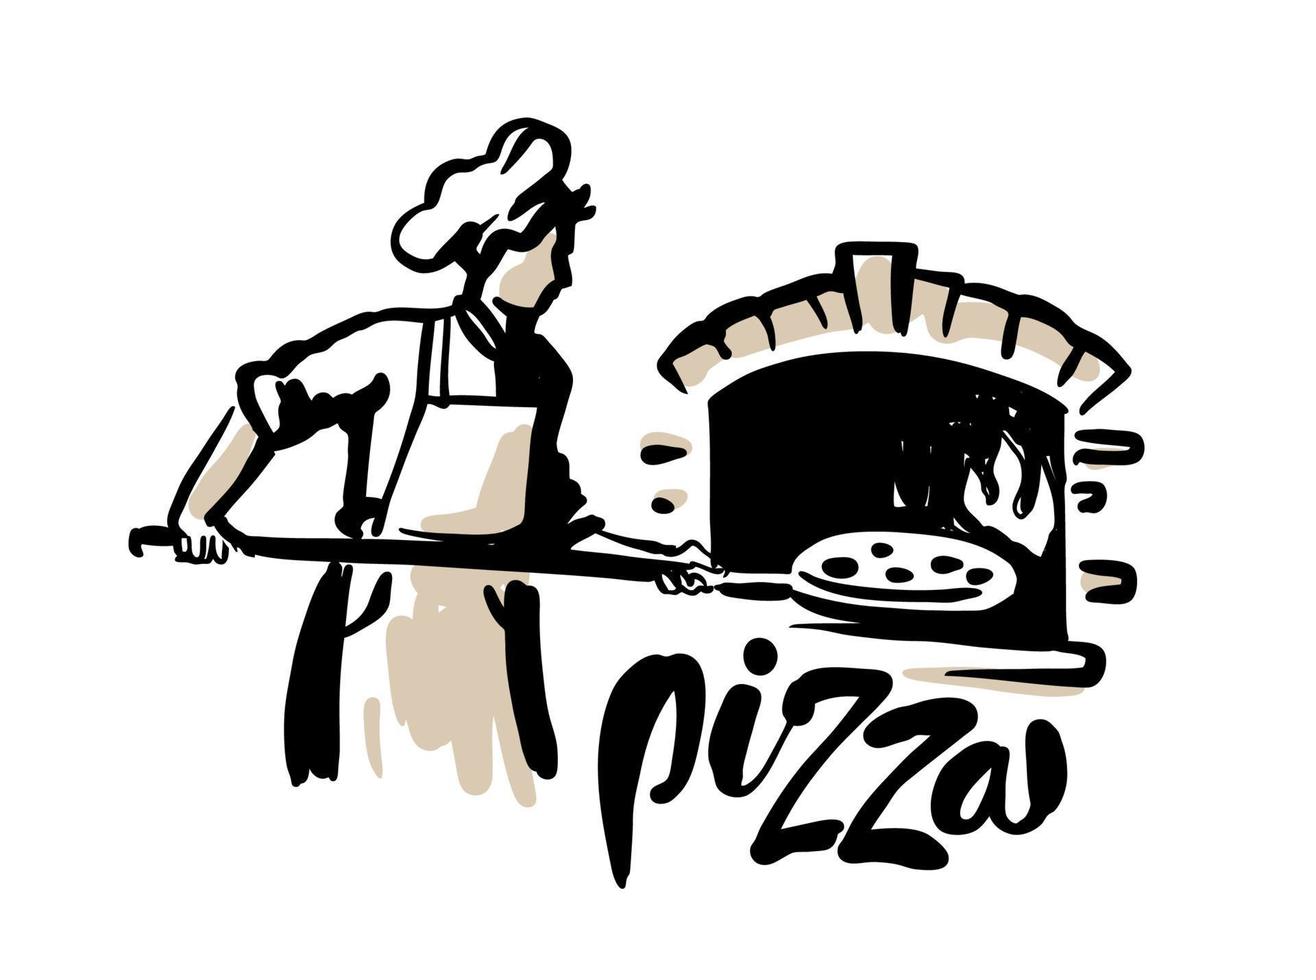 Koch legt Pizza in den Ofen. Skizzenstil. vektor